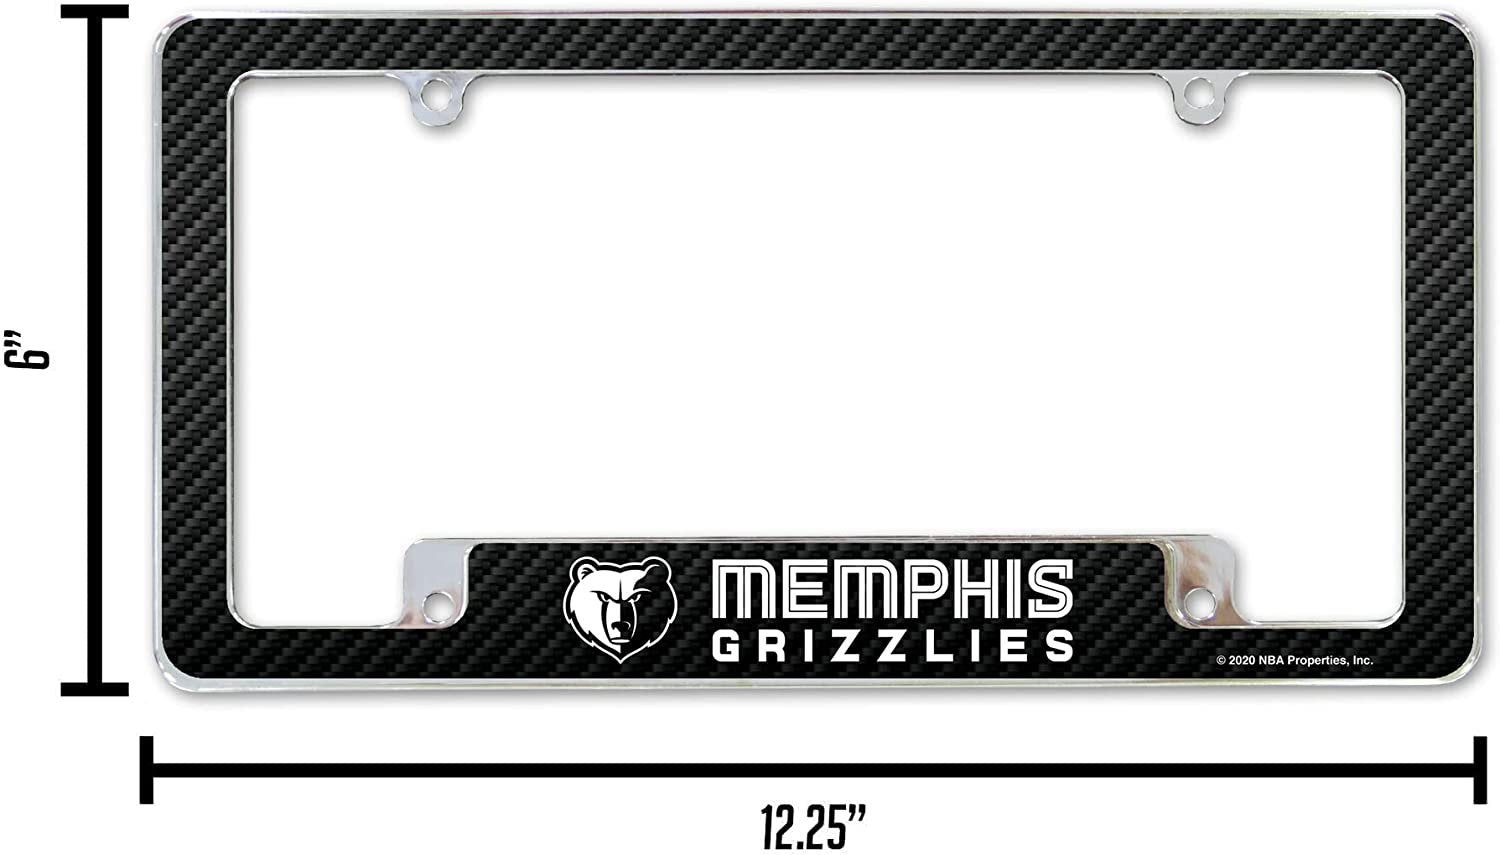 Memphis Grizzlies Metal License Plate Frame Chrome Tag Cover, Carbon Fiber Design, 12x6 Inch